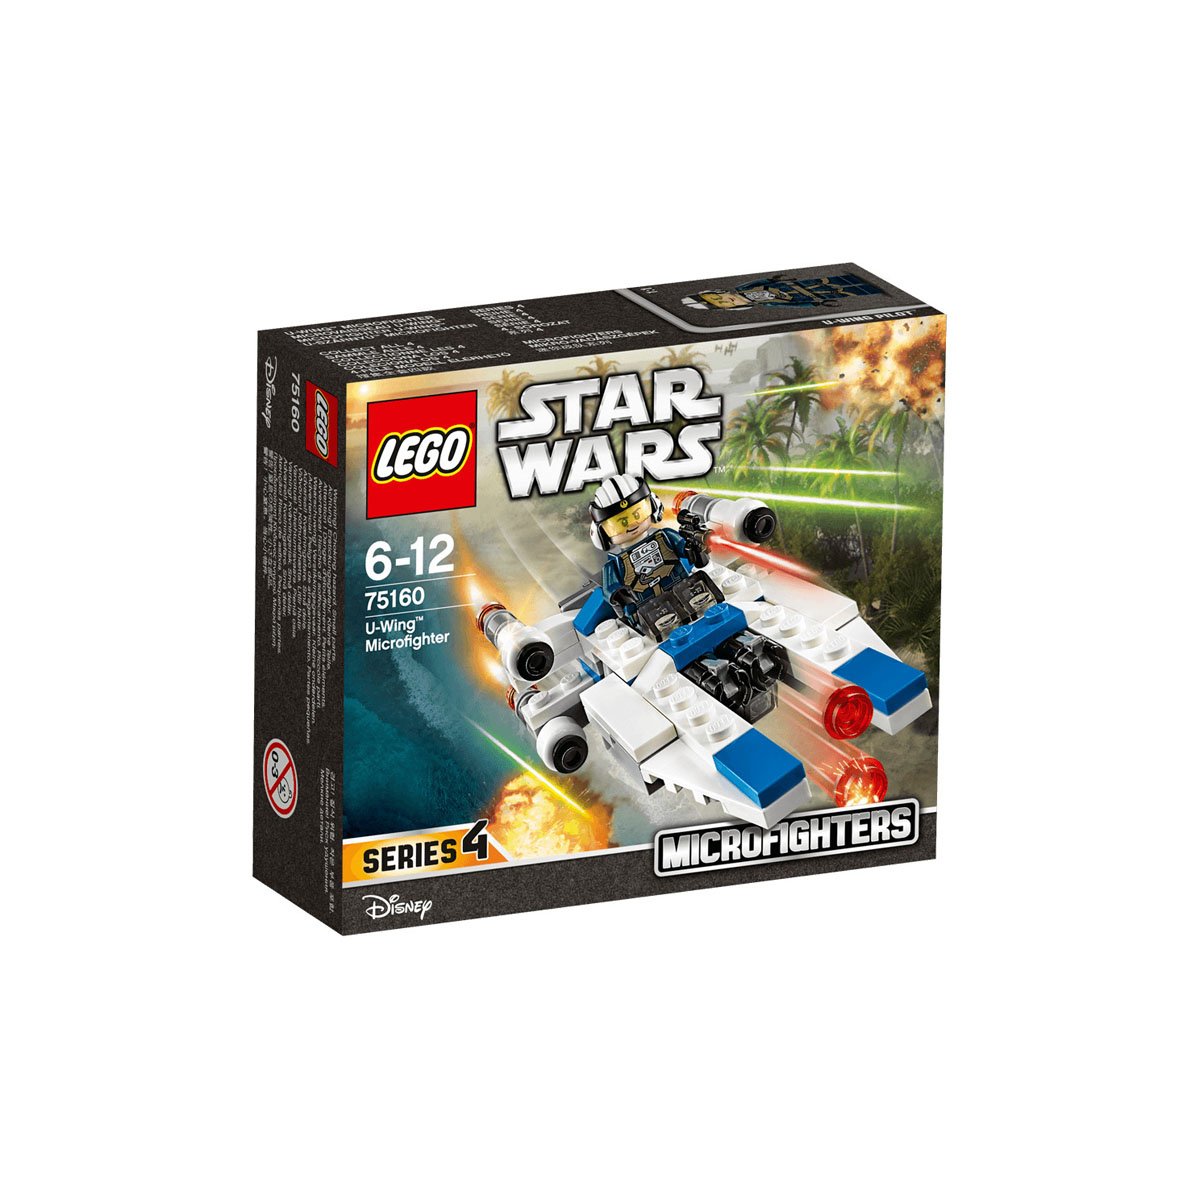 U Wing Microfighter Lego